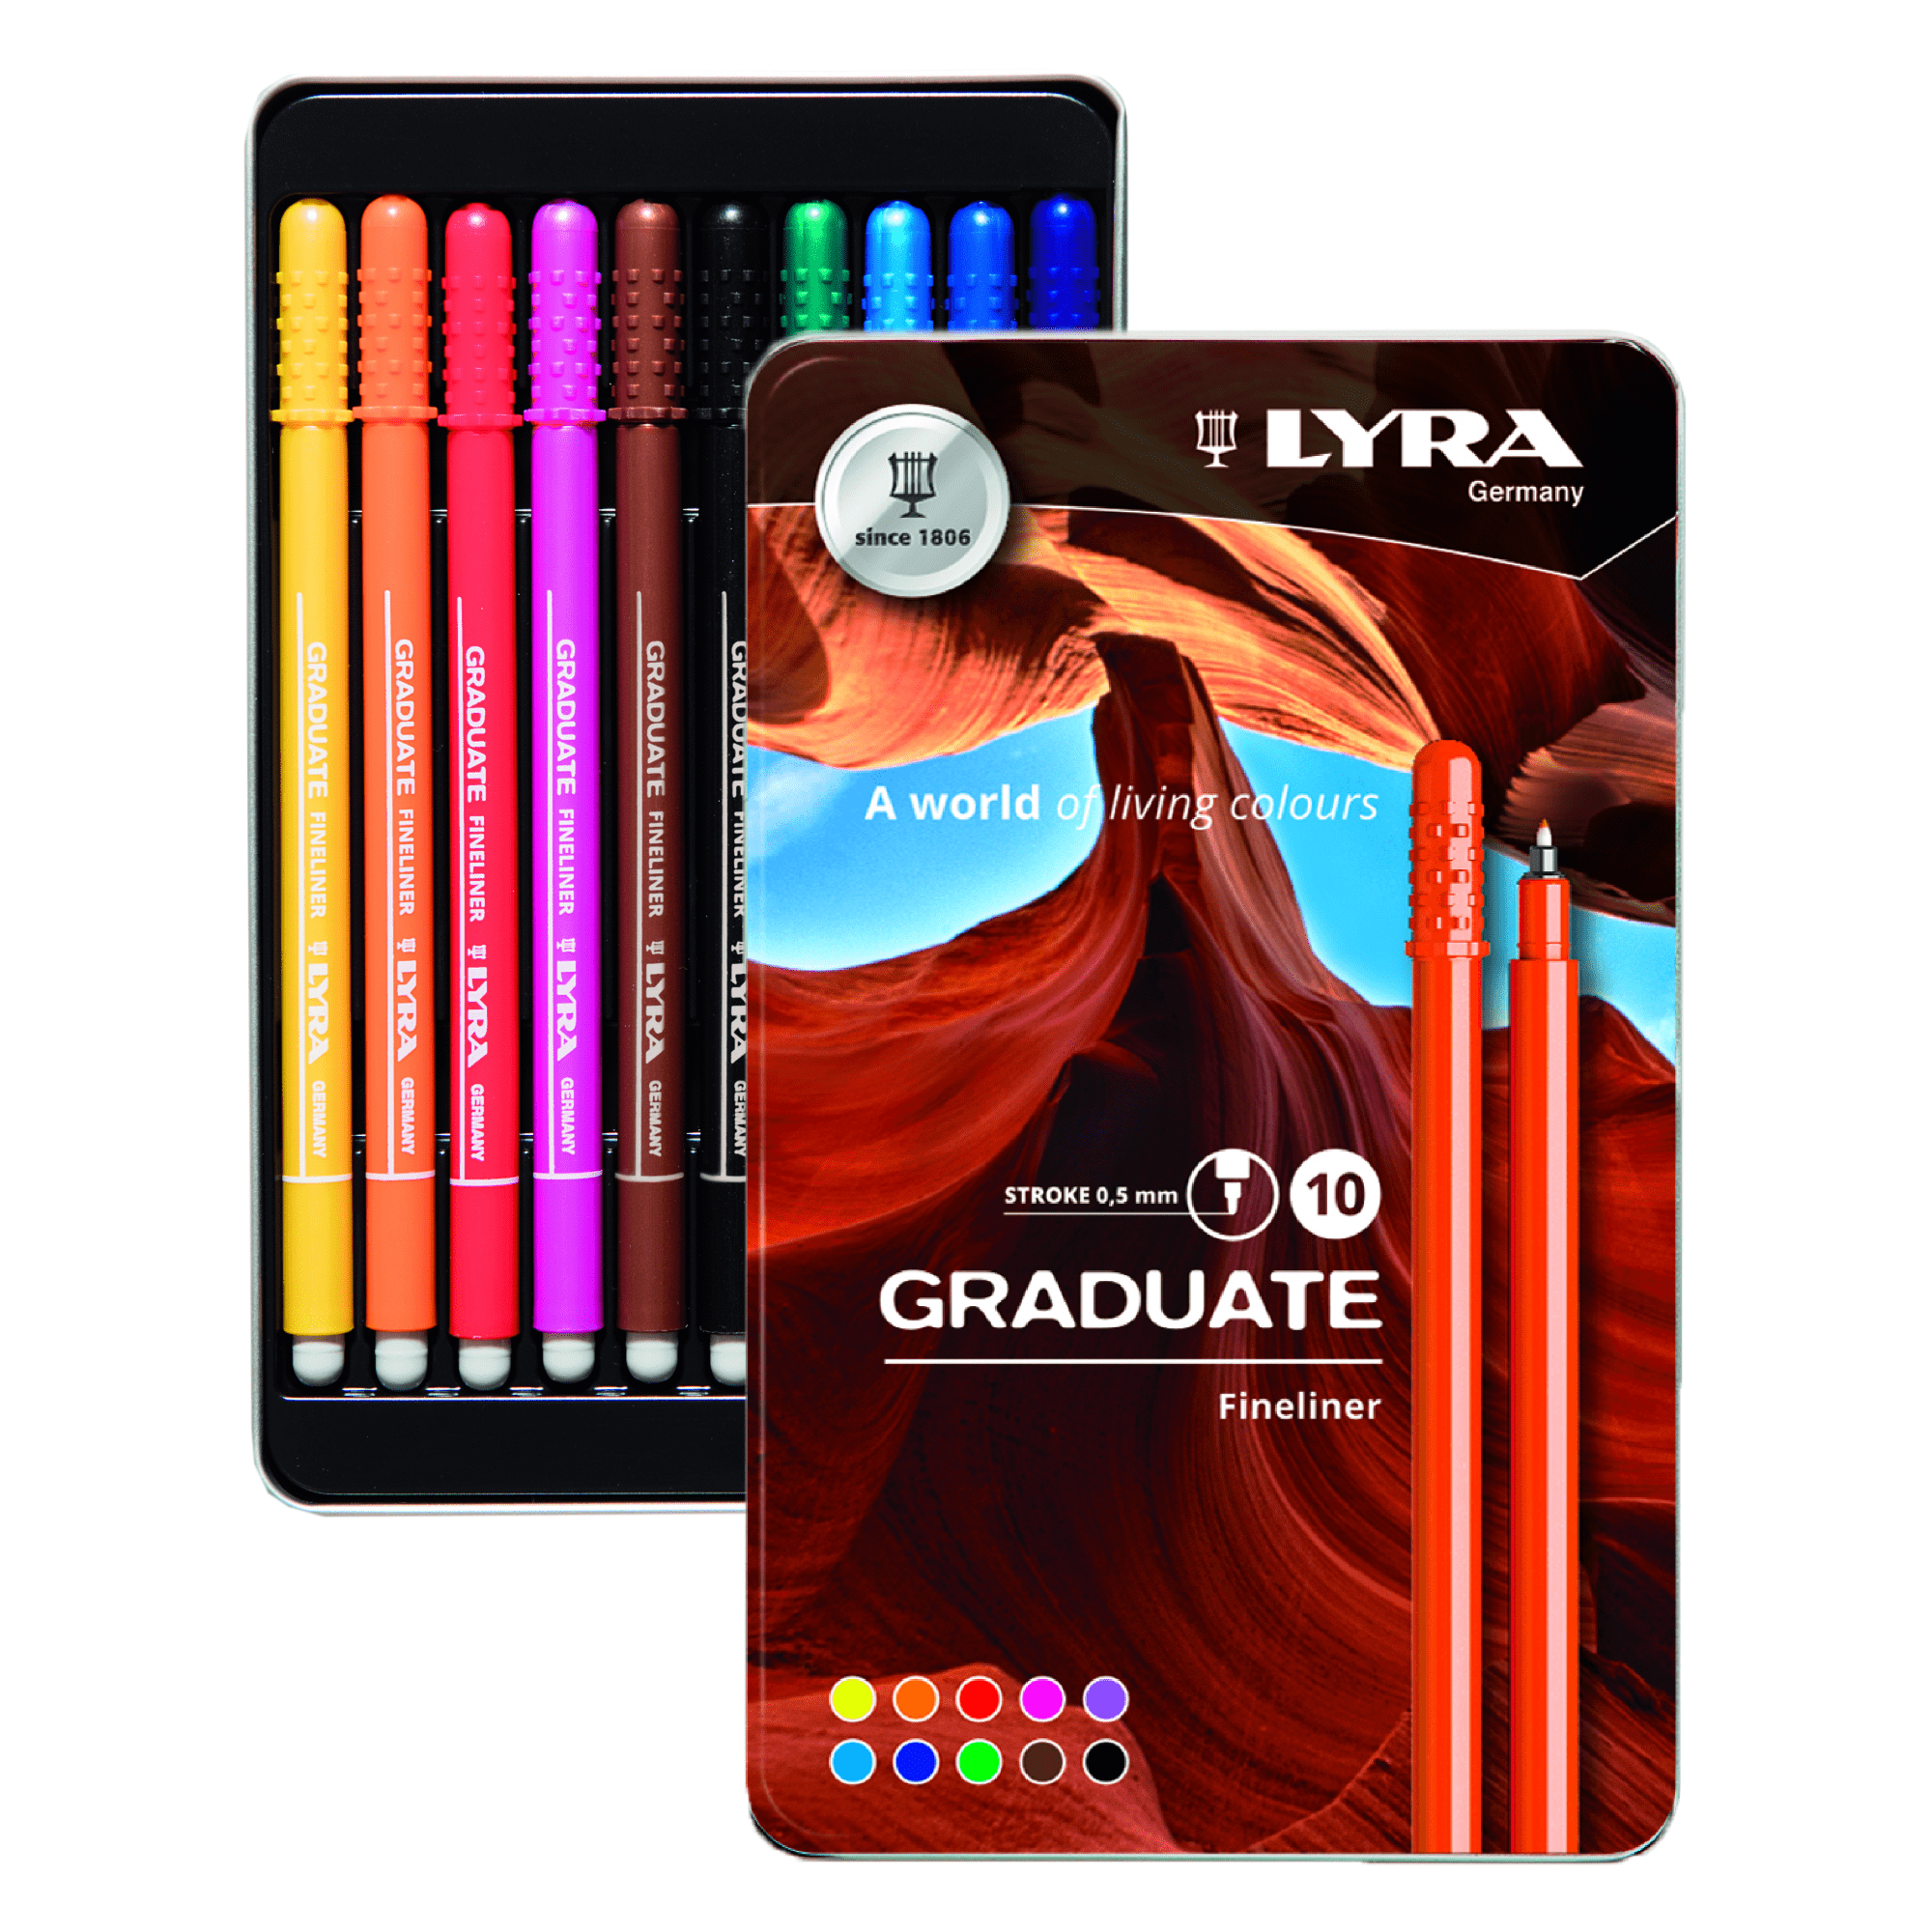 LYRA Graduate Fineliner Art Markers, 0.5 mm Fine Tip, Assorted Colors, 10  Count Set - Teens, Students, Artists, Kids